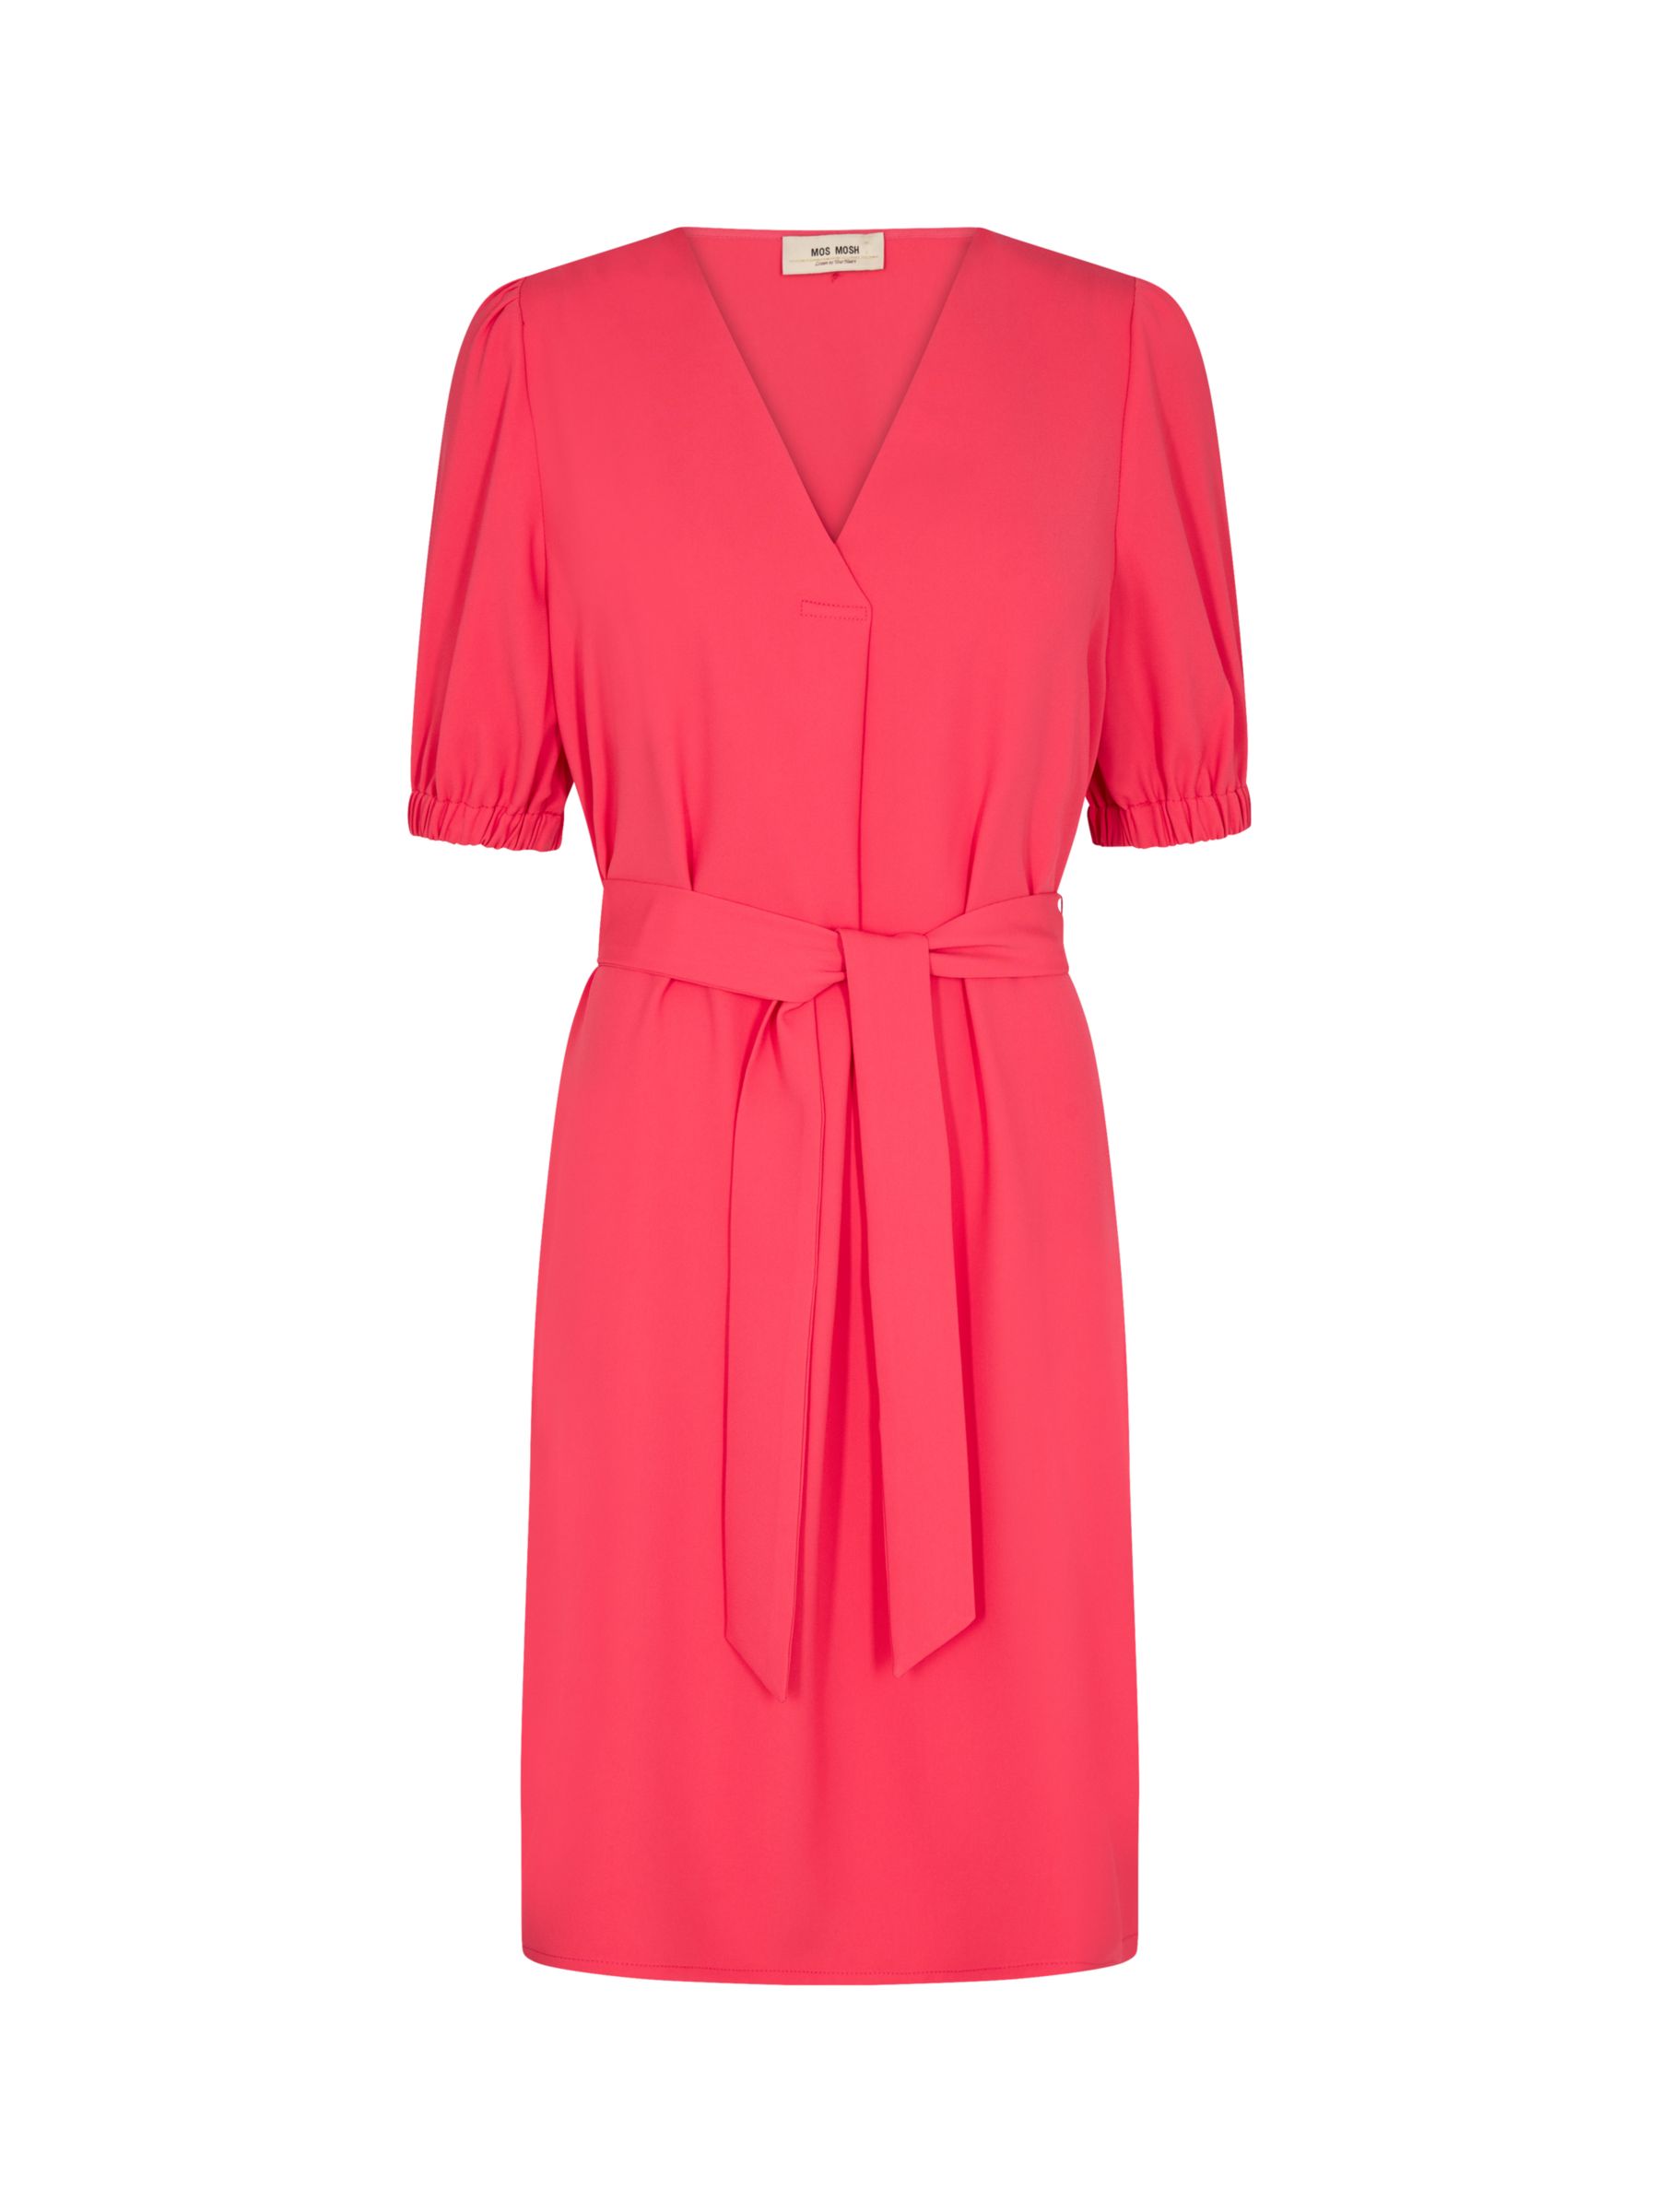 MOS MOSH Women's Maeve Leia Short Sleeve Dress, Pink, XS